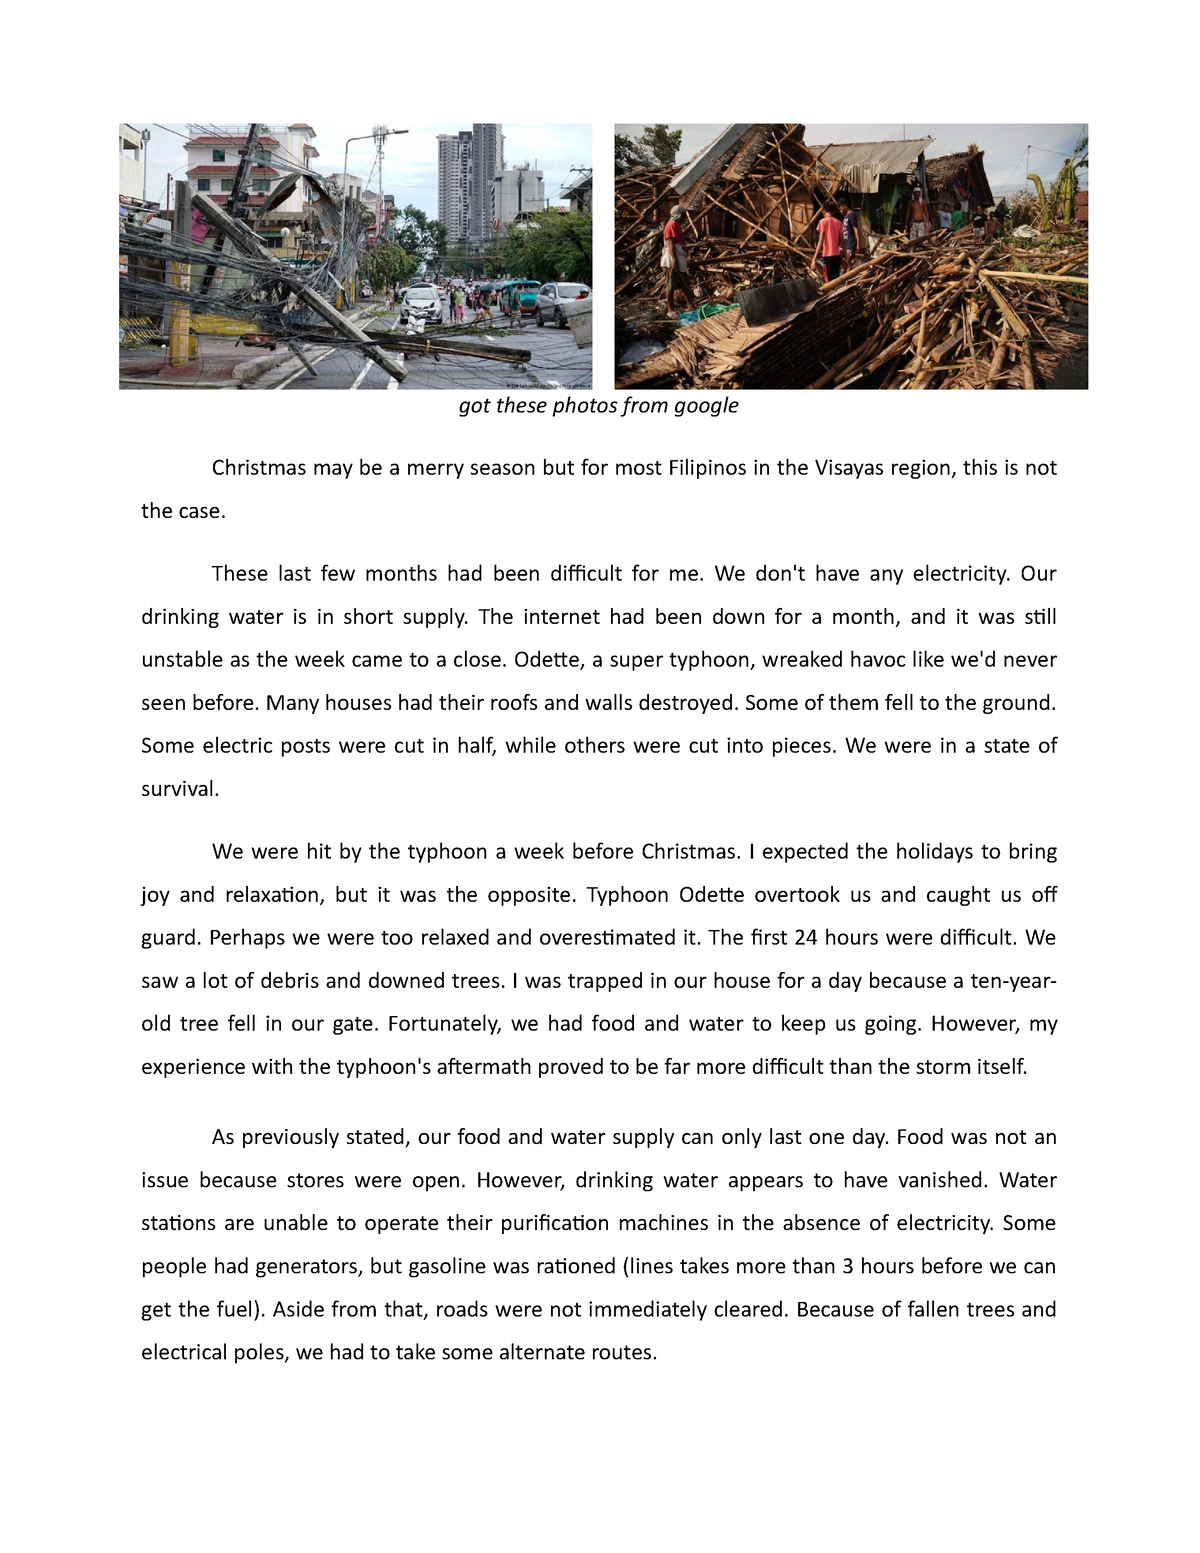 my experience in typhoon odette essay